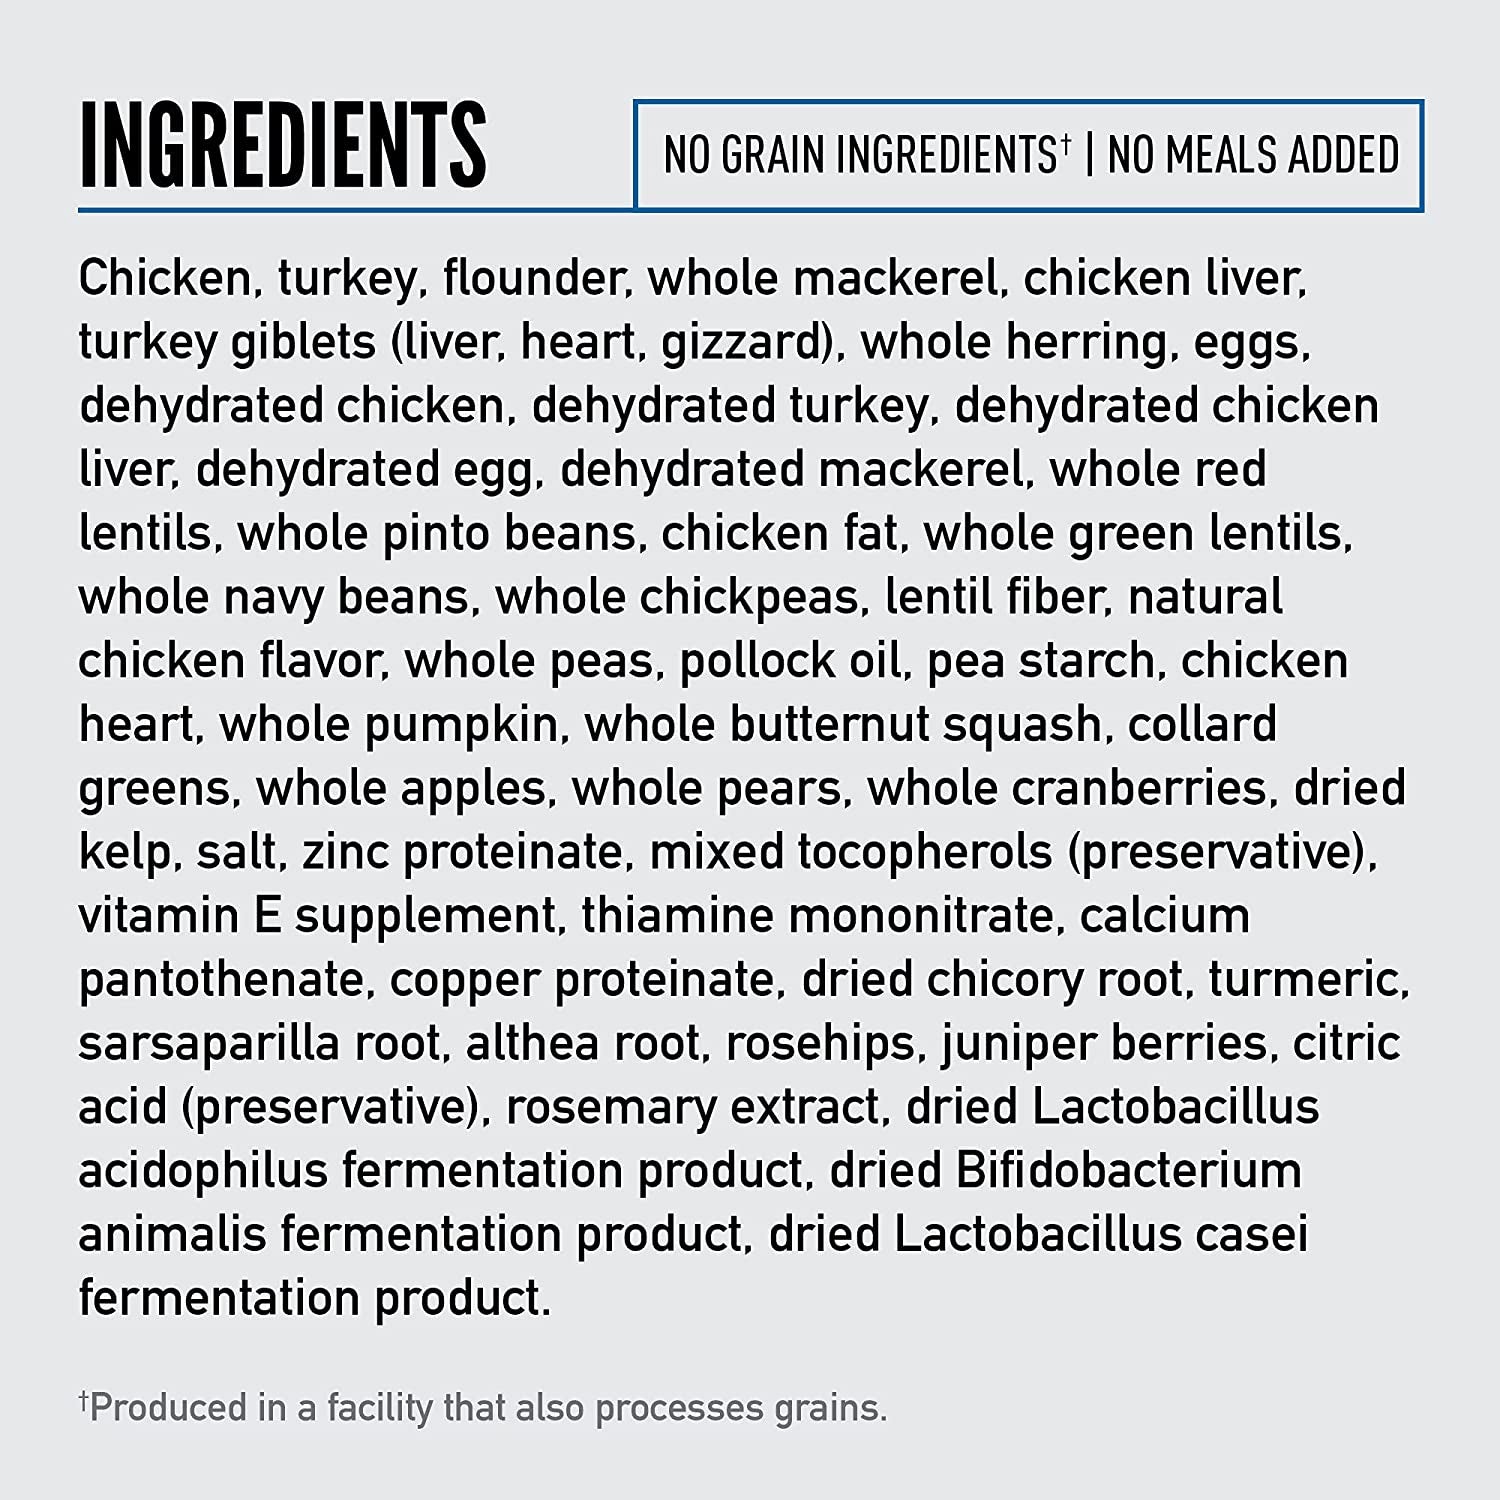 ORIJEN Dog Original Recipe, 4.5Lb, High-Protein Grain-Free Dry Dog Food, Packaging May Vary